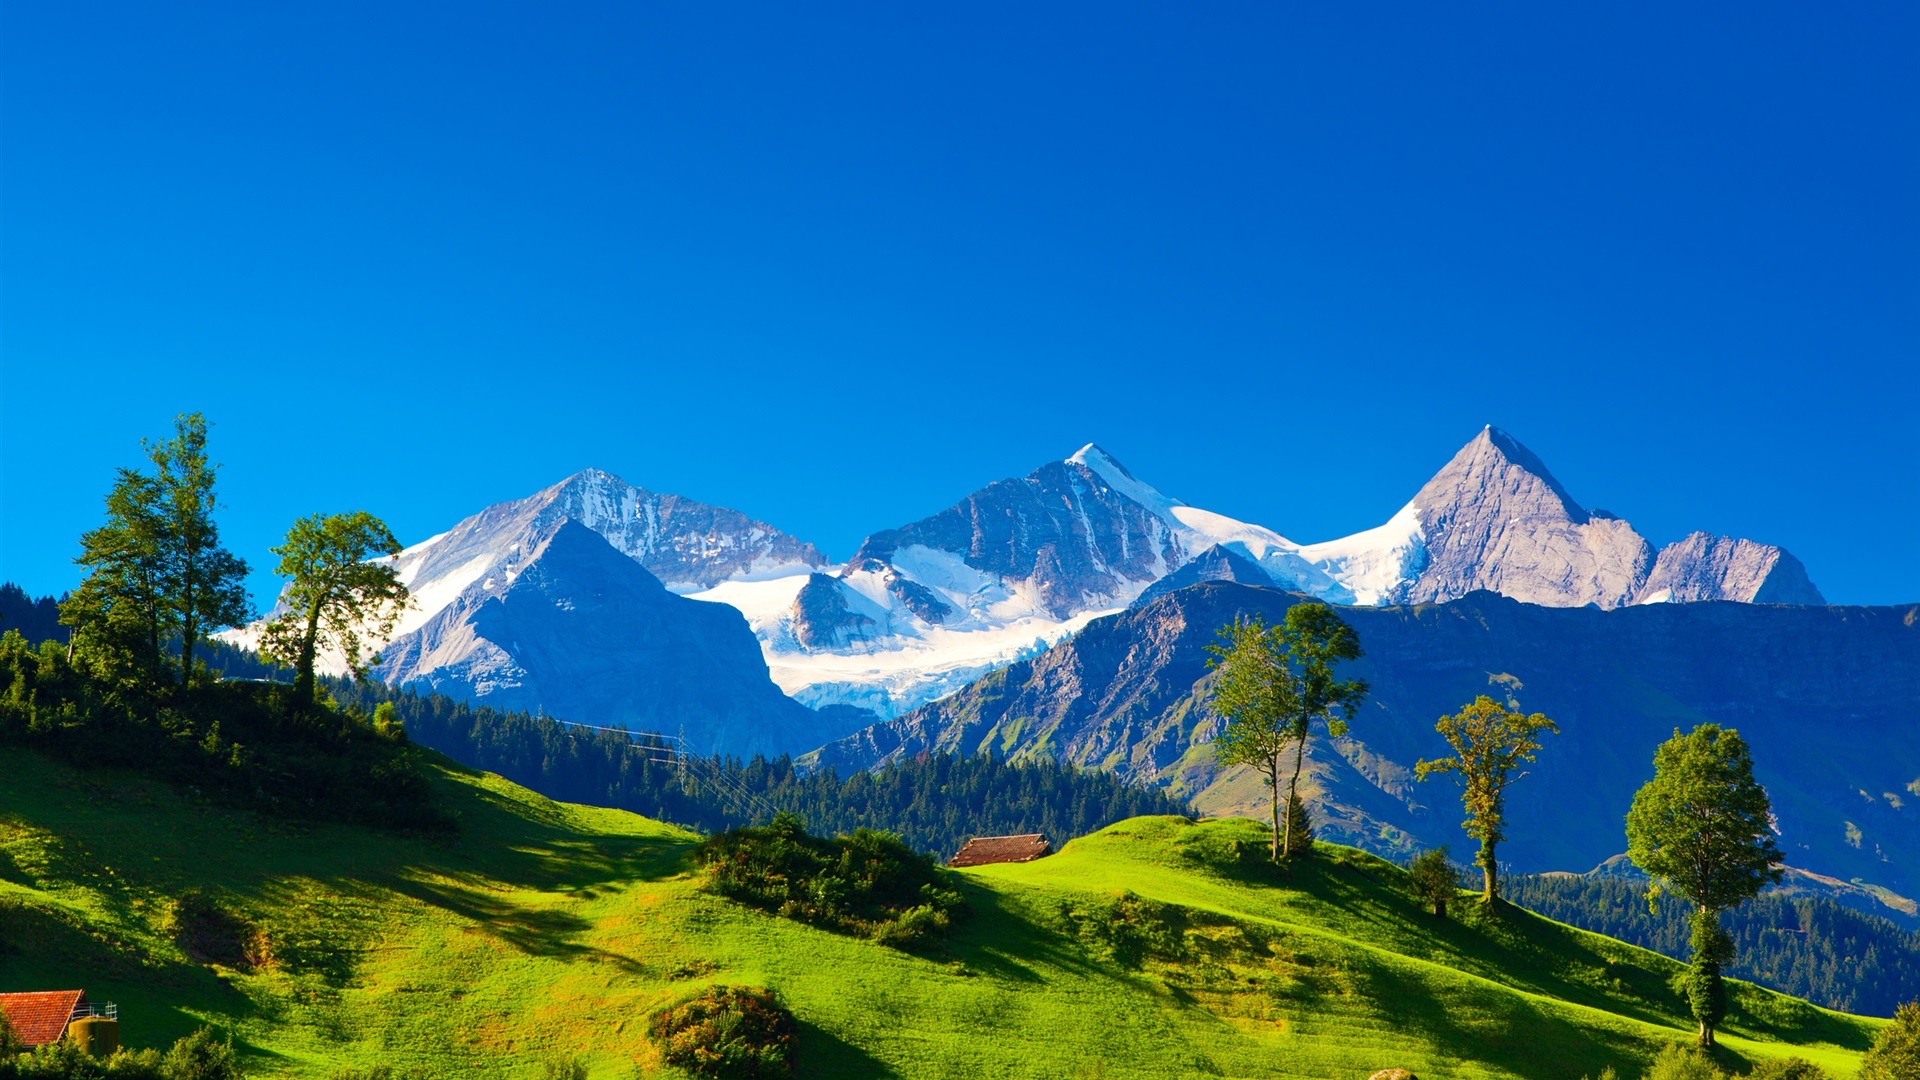 Switzerland Alps mountains green grass trees blue